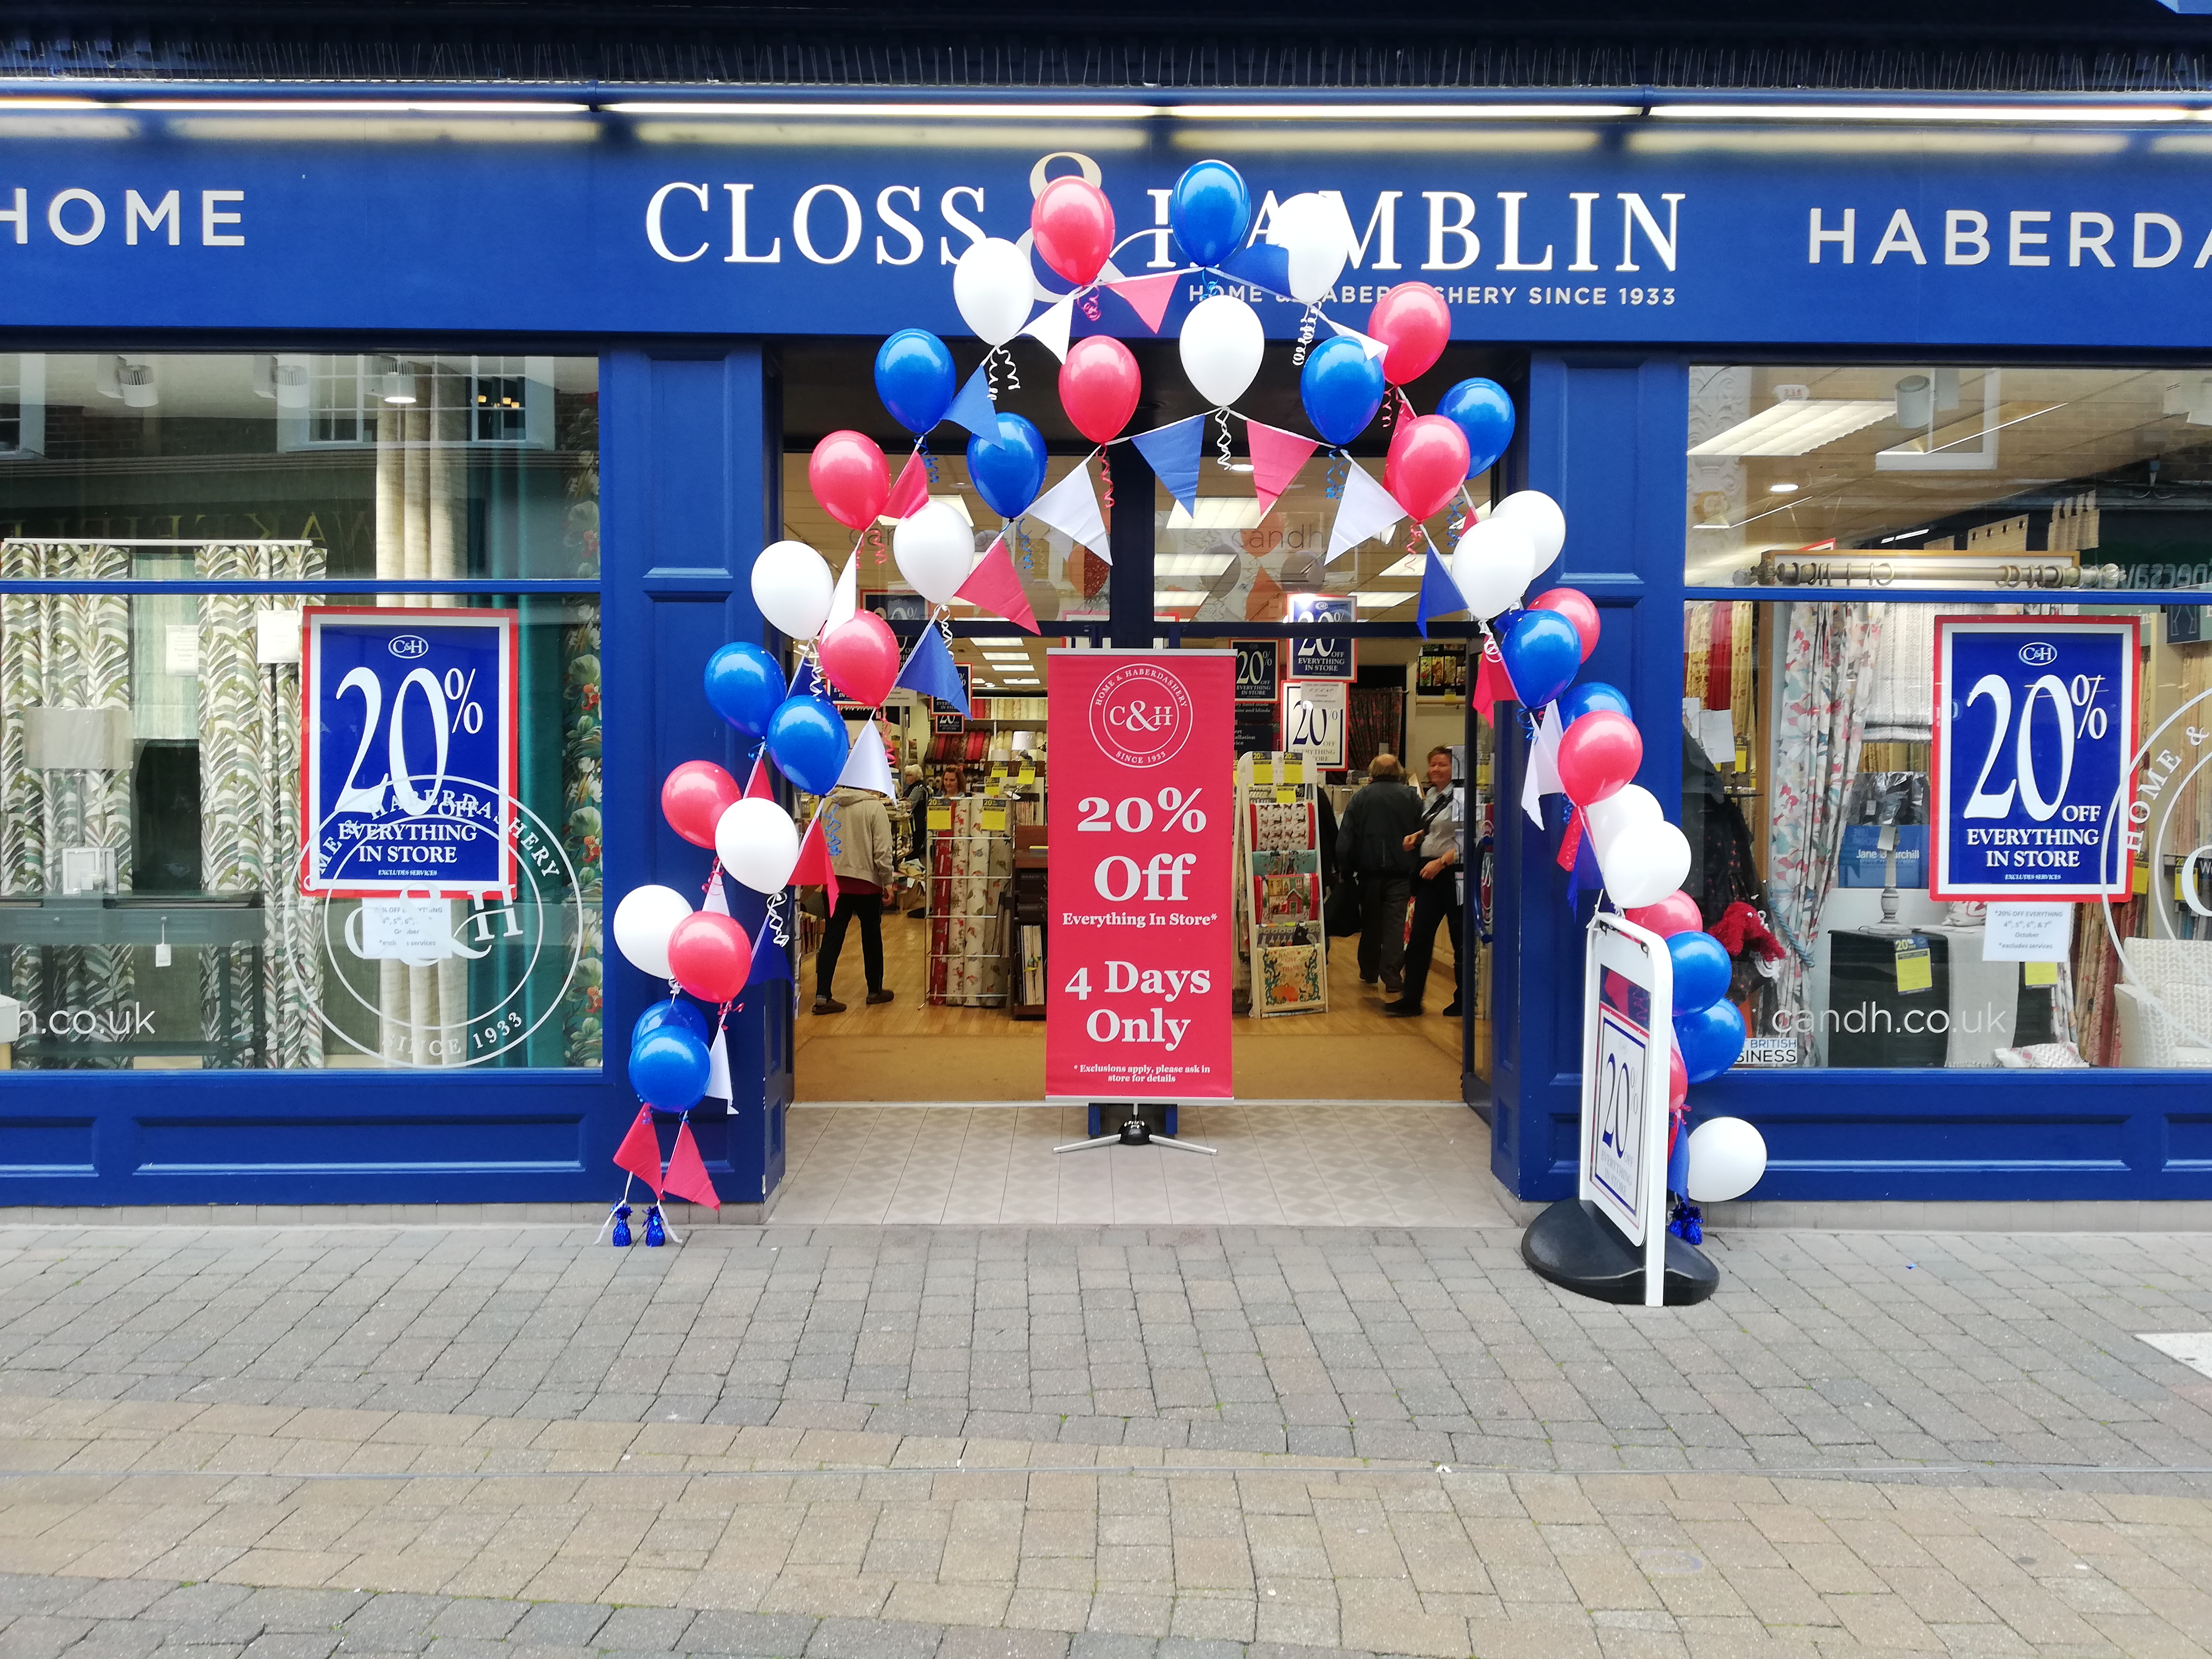 Closs & Hamblin, Horsham Promotional Arch